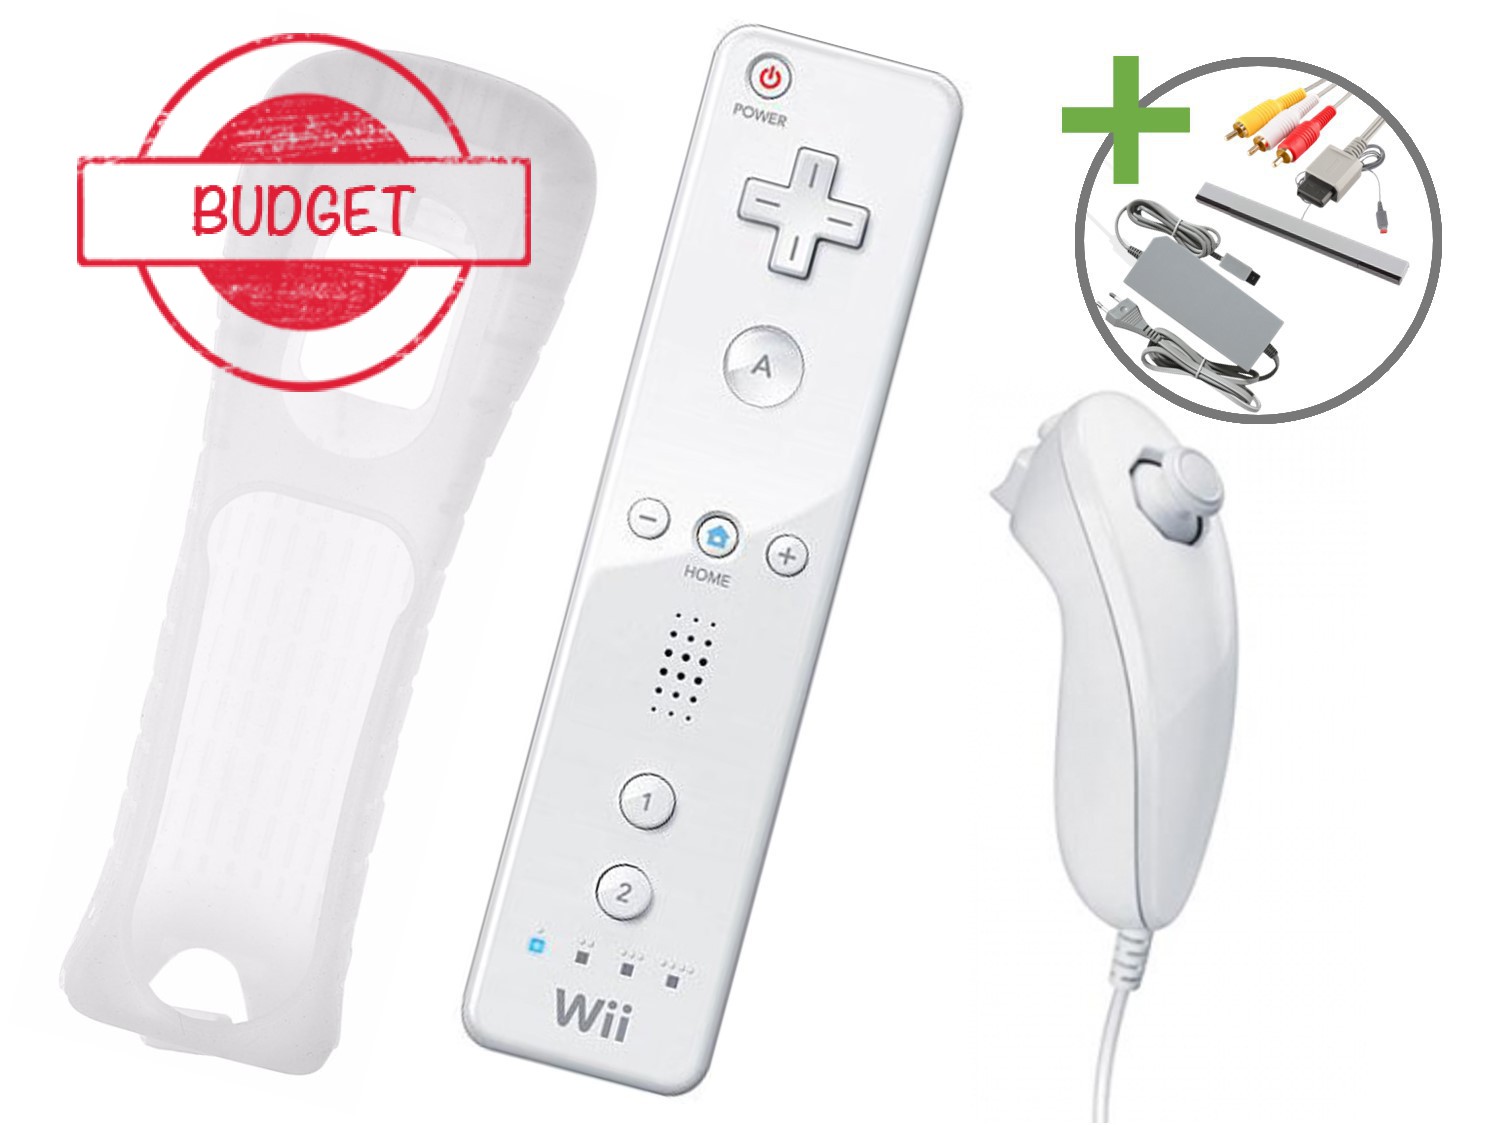 Nintendo Wii Starter Pack - Wii Sports Edition - Budget - Wii Hardware - 3